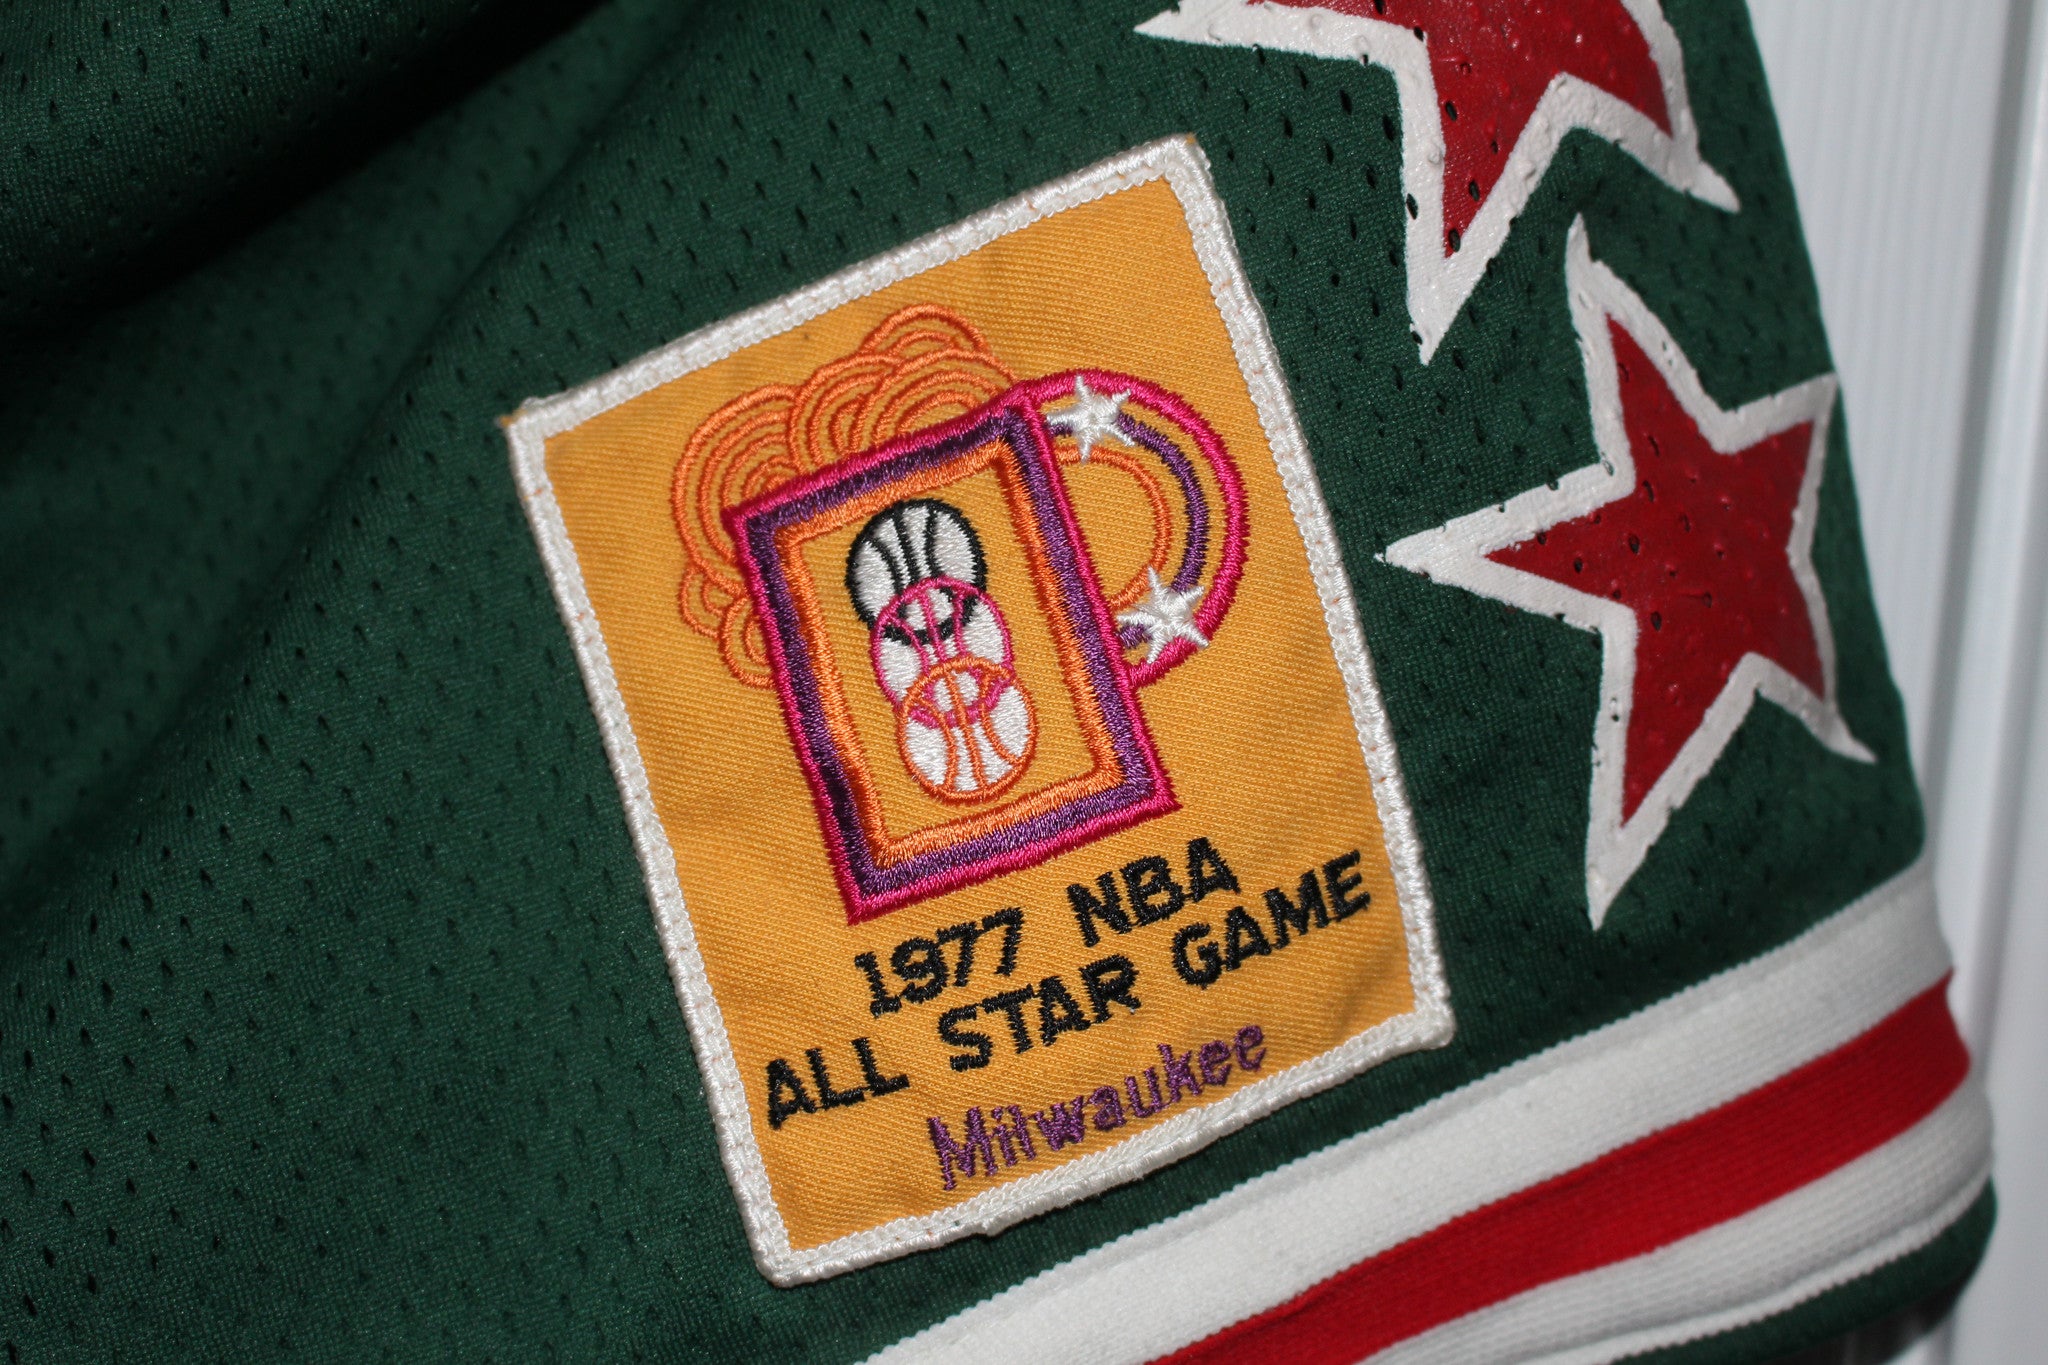 1977 nba all star game